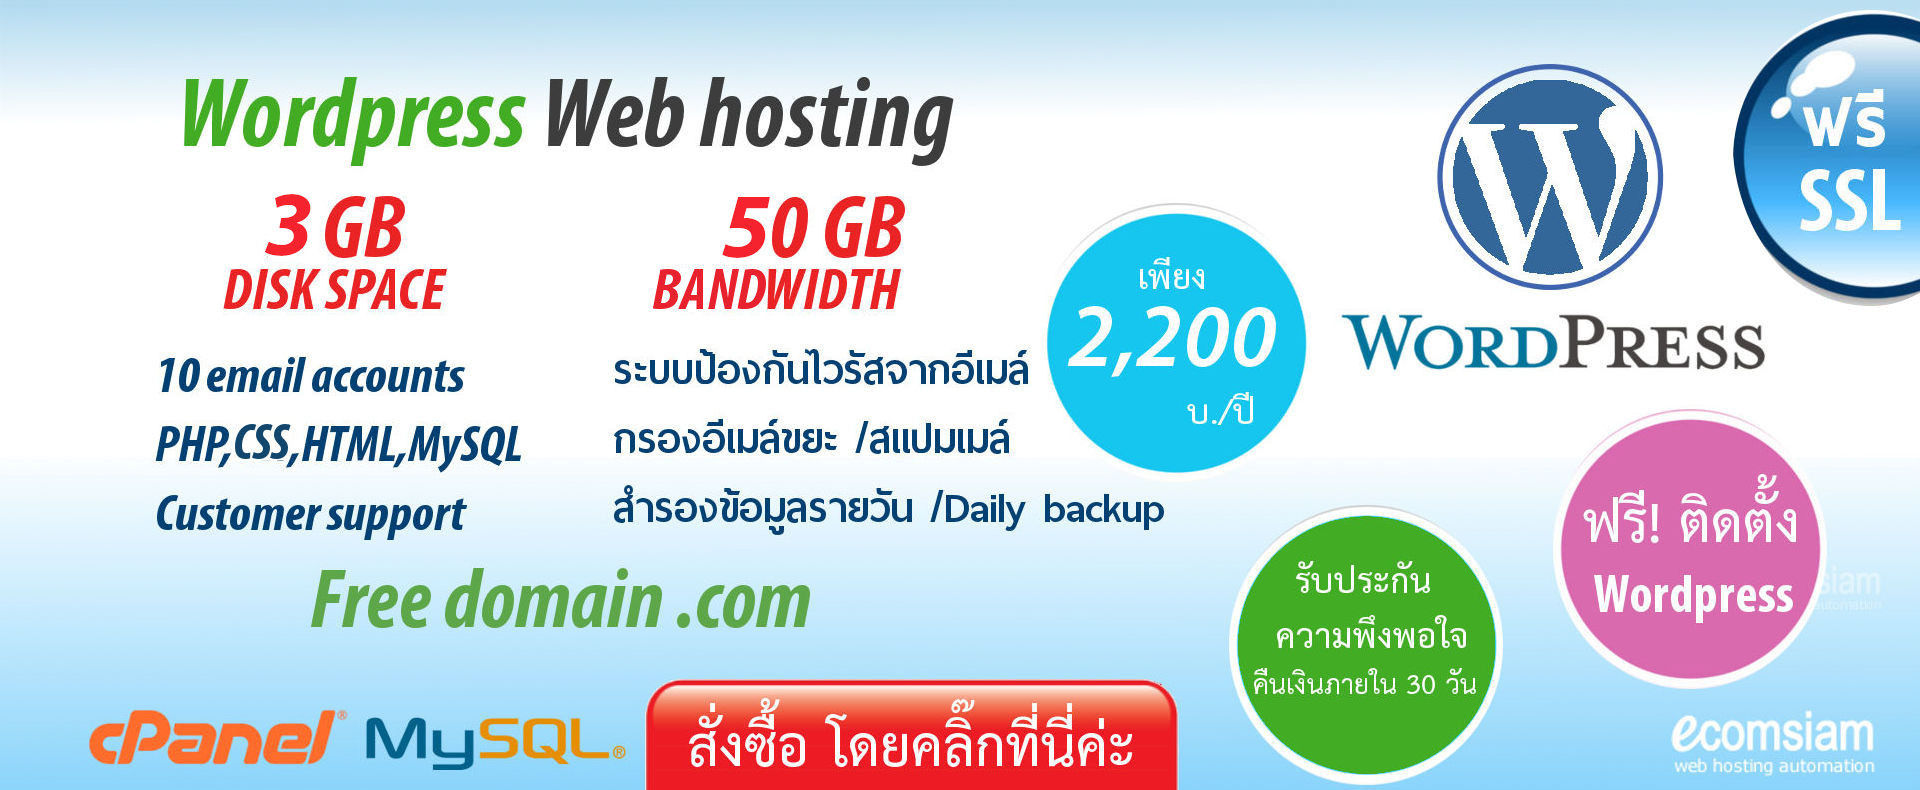 Wordpress web hosting thailand บริการเว็บโฮสติ้ง ฟรีโดเมน ฟรี SSL -แนะนำ wordpress web hosting thailand -เว็บโฮสติ้ง ฟรีโดเมน ฟรี SSL - web hosting thailand free domain -wordpress web hosting banner